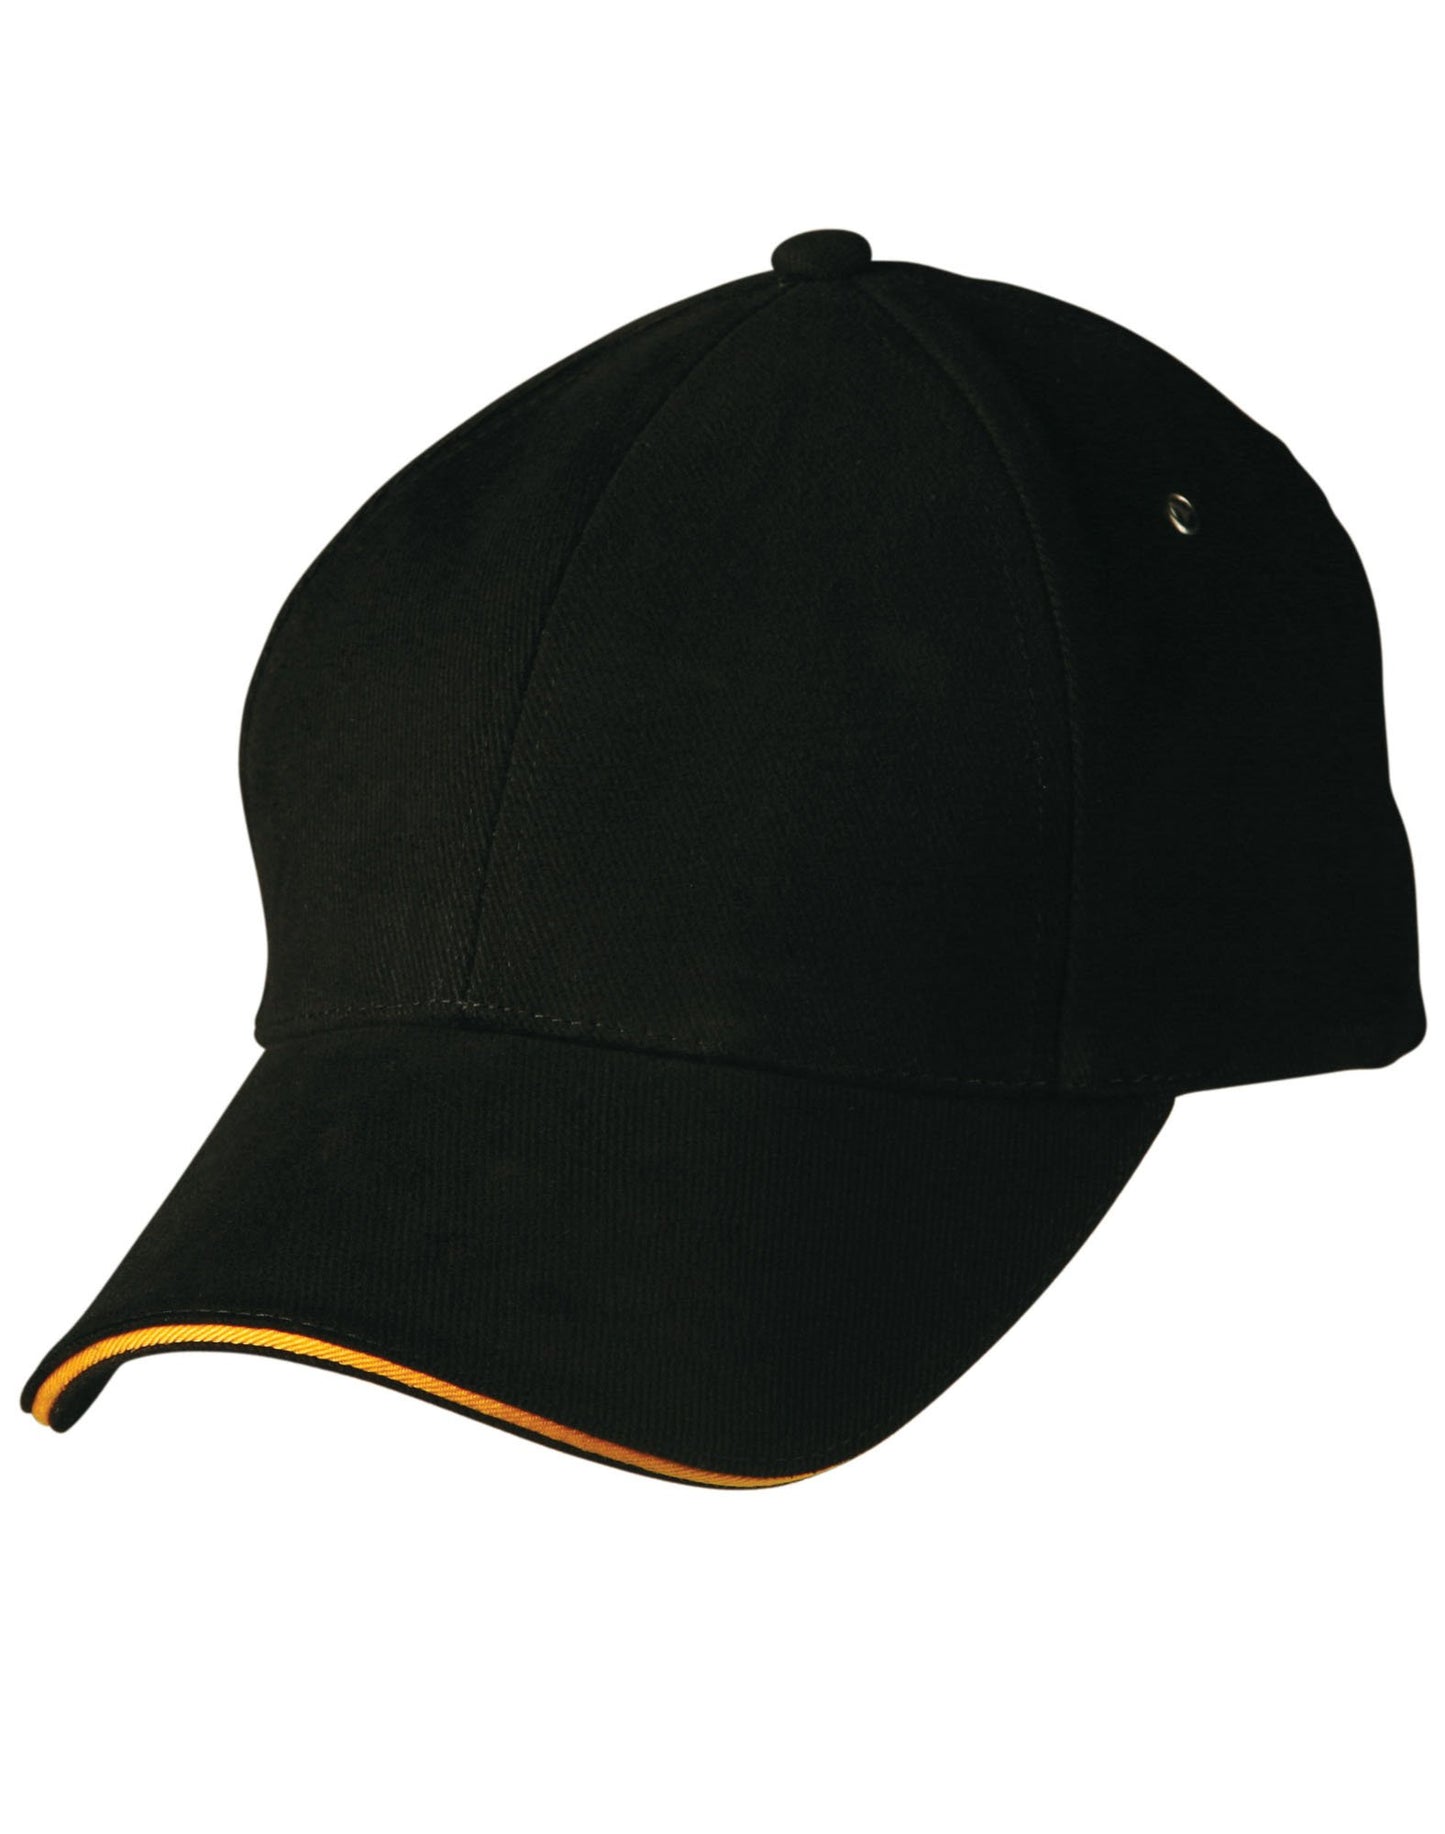 Ch18 Sandwich Peak Cap - Star Uniforms Australia